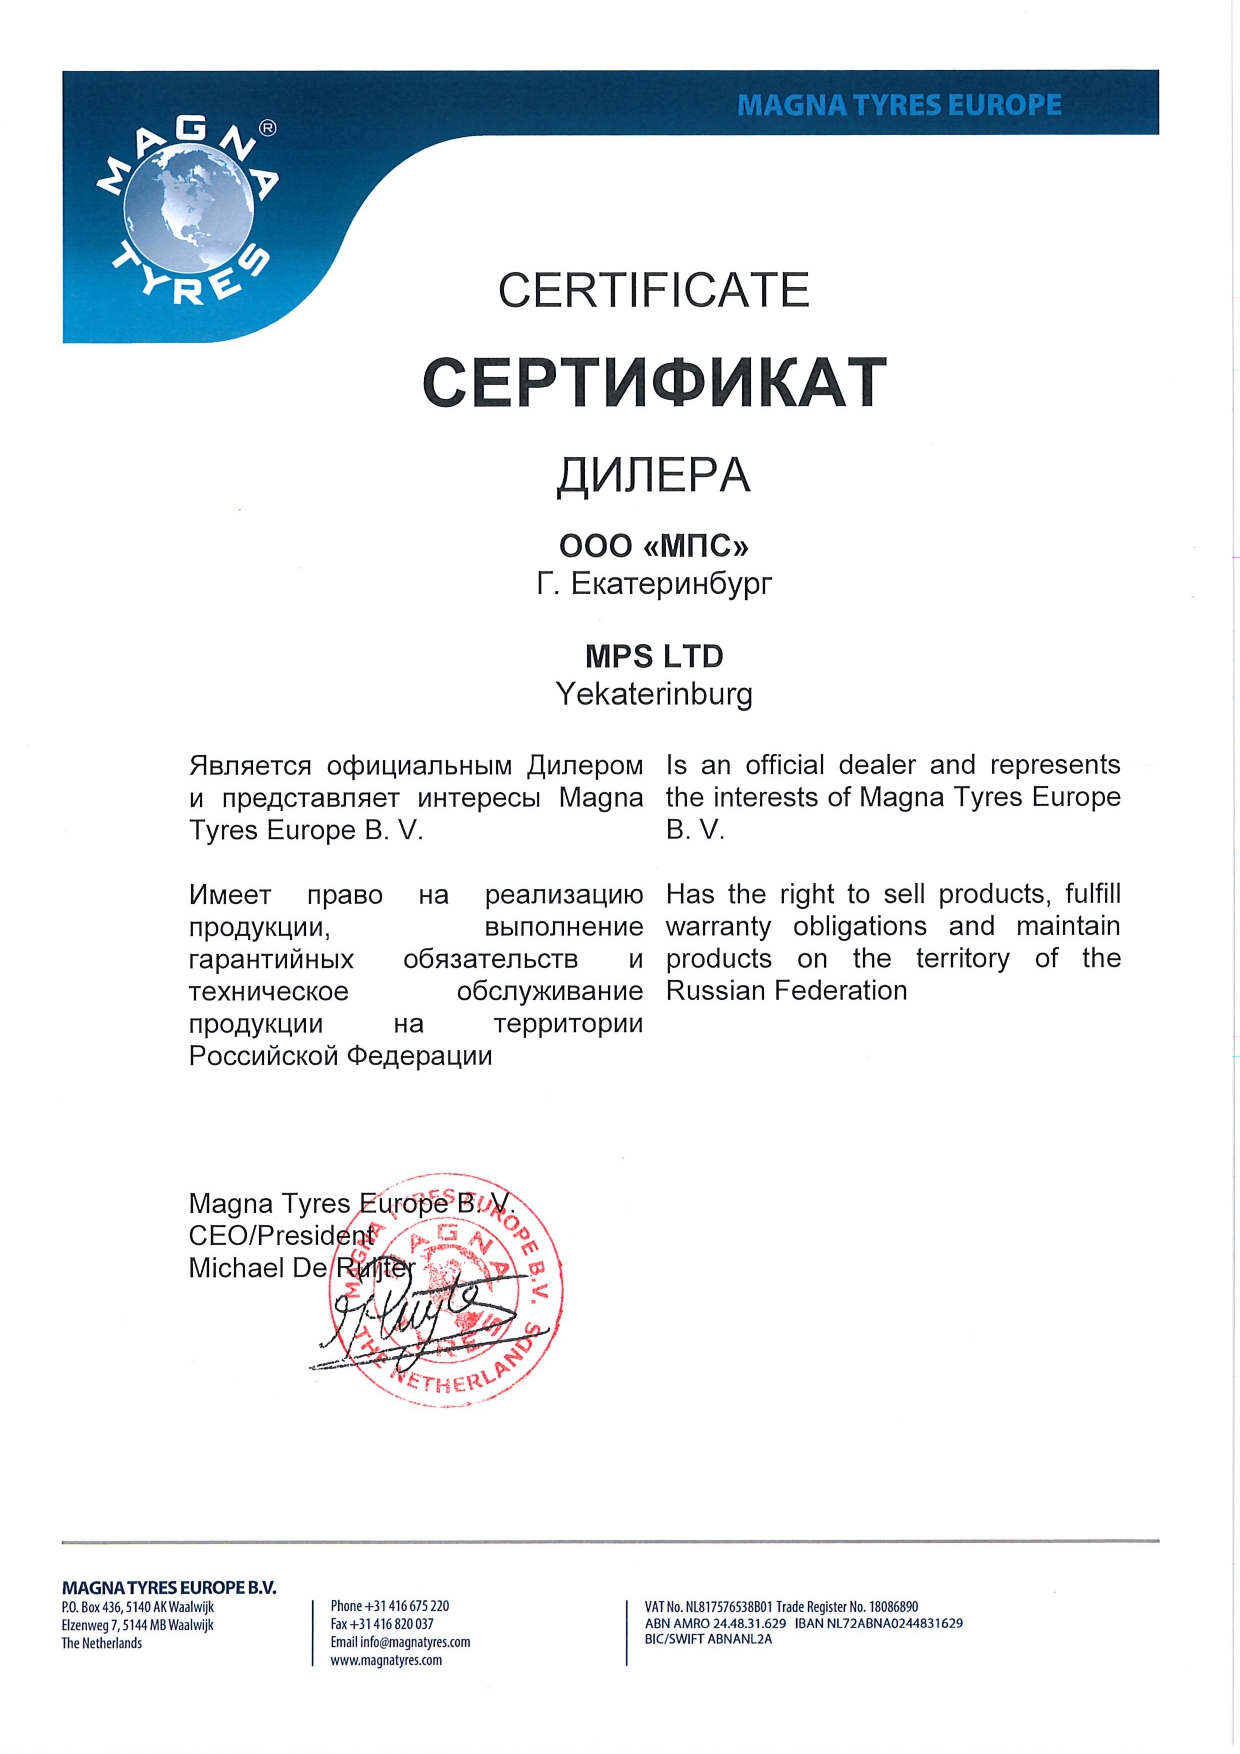 Сертификат дилера Magna TYRES